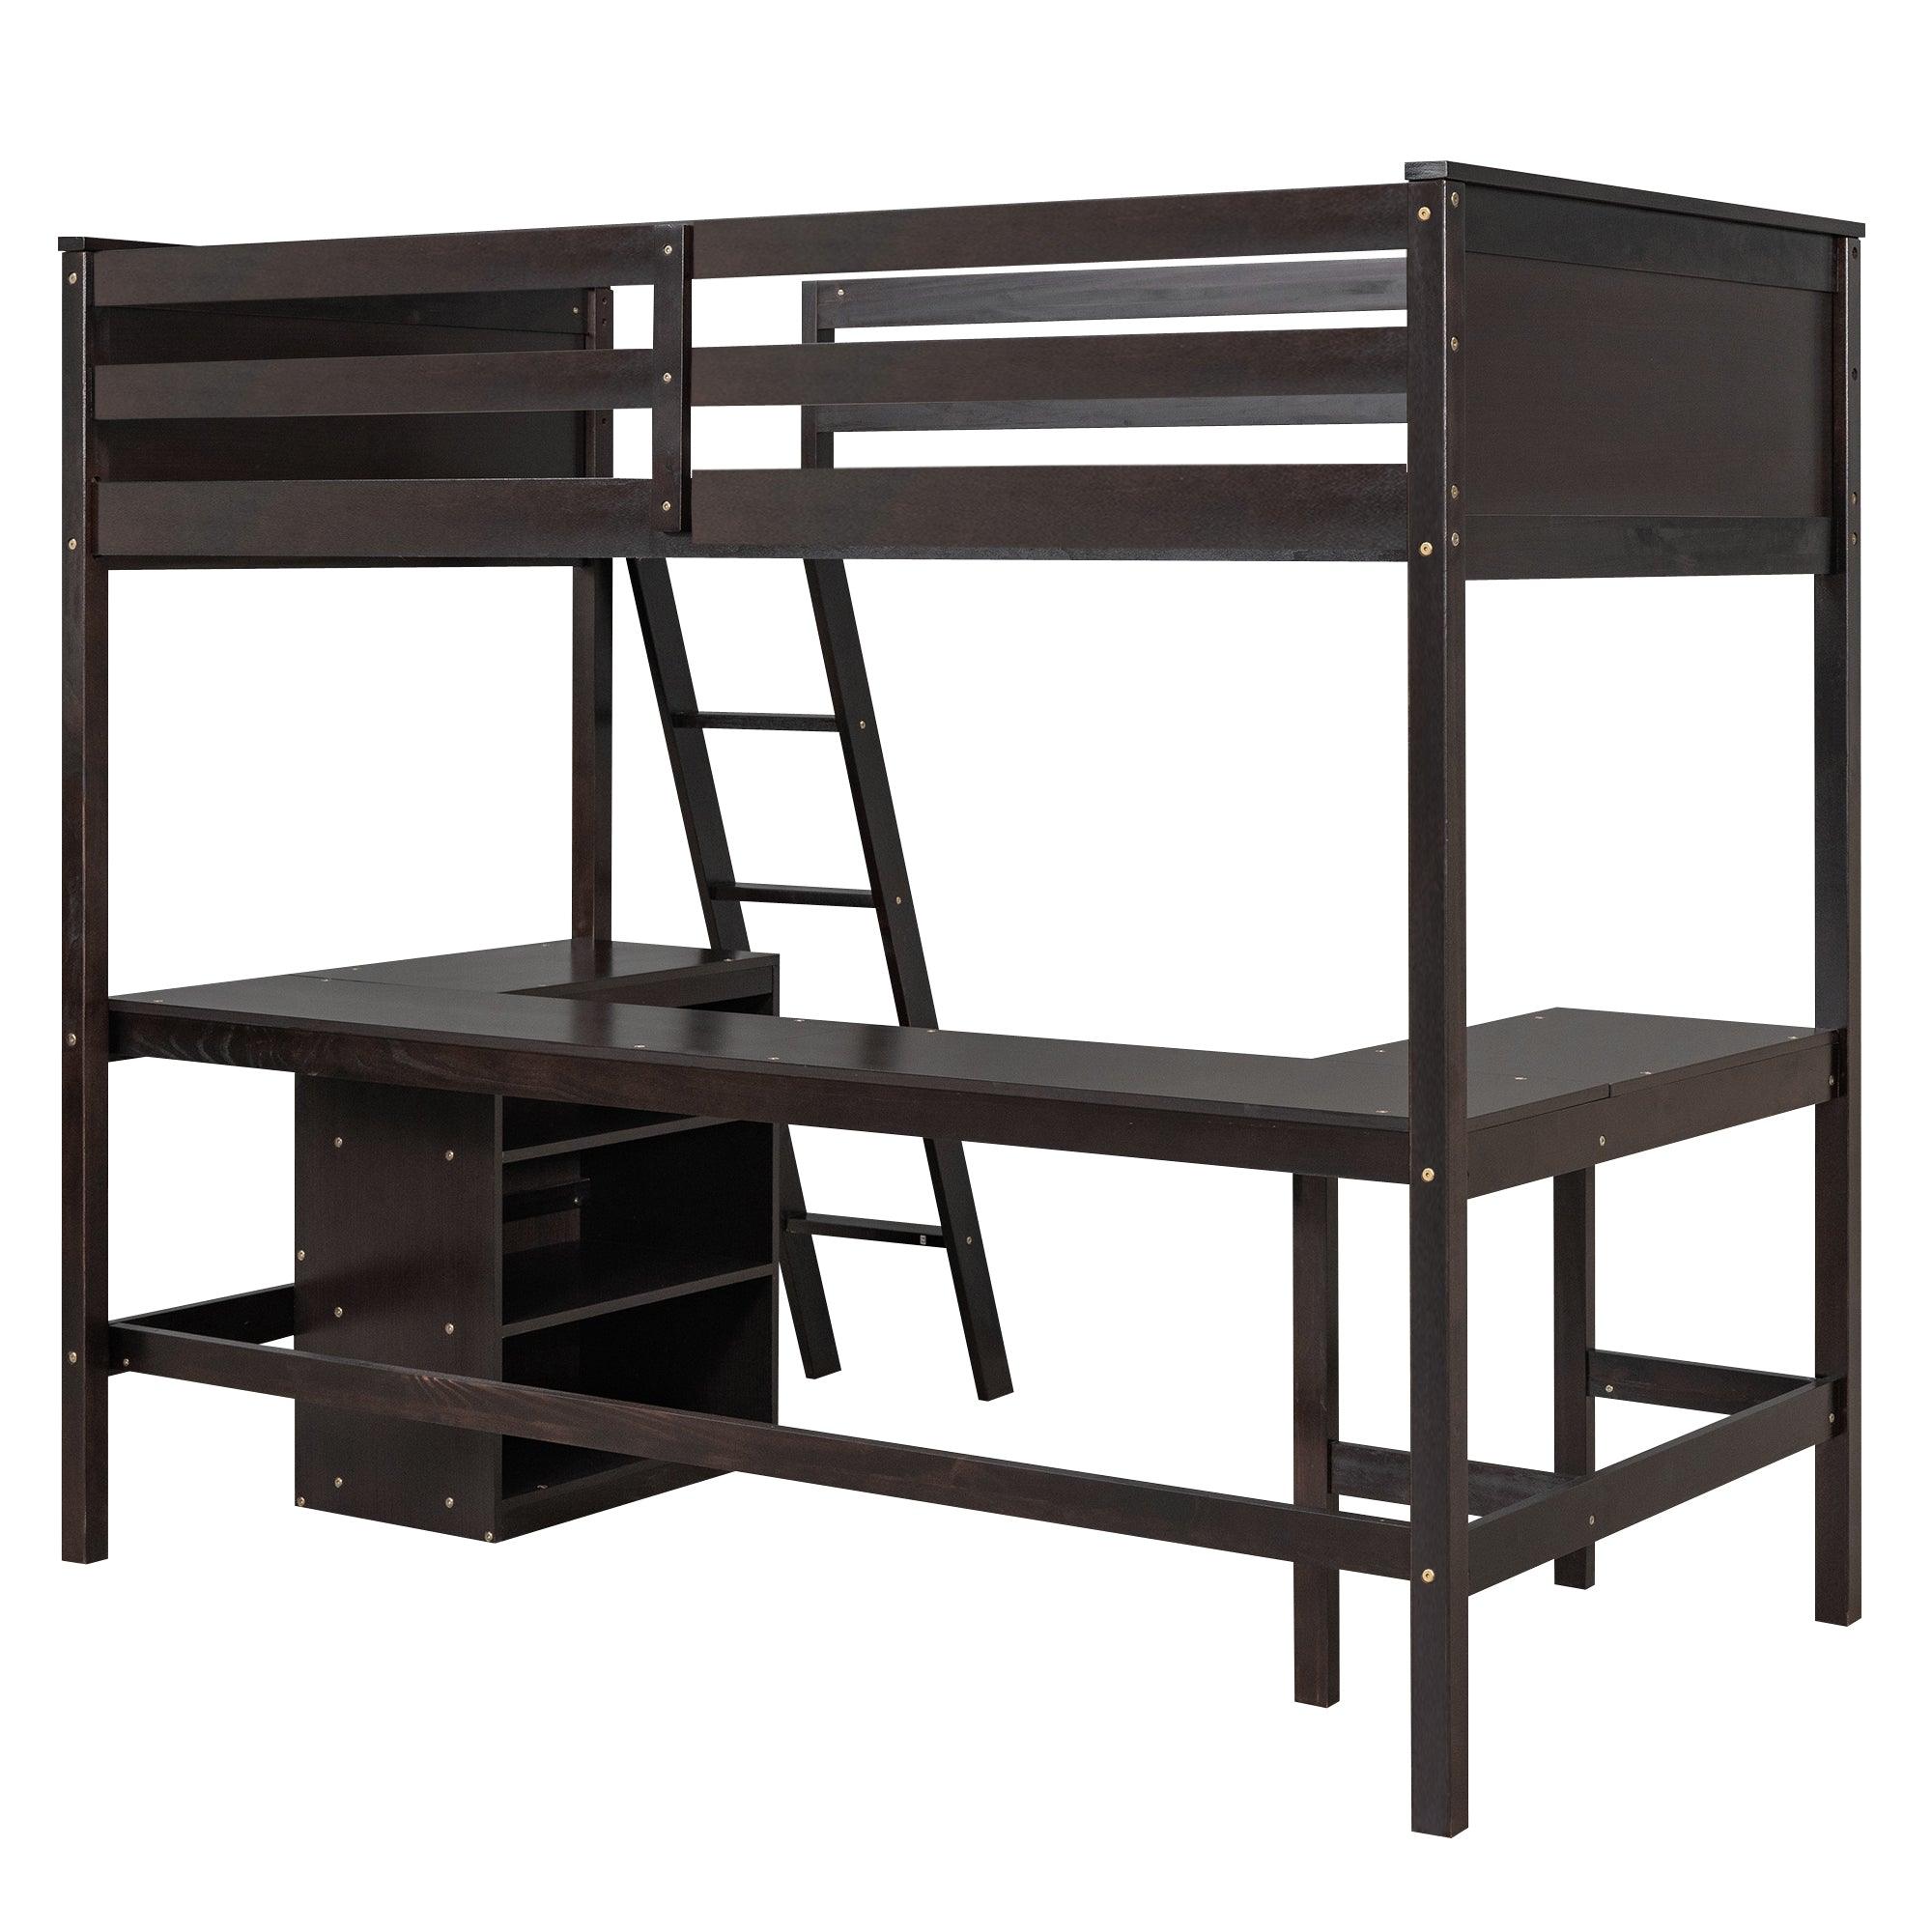 Bellemave Twin size Loft Bed with Shelves and Desk - Bellemave